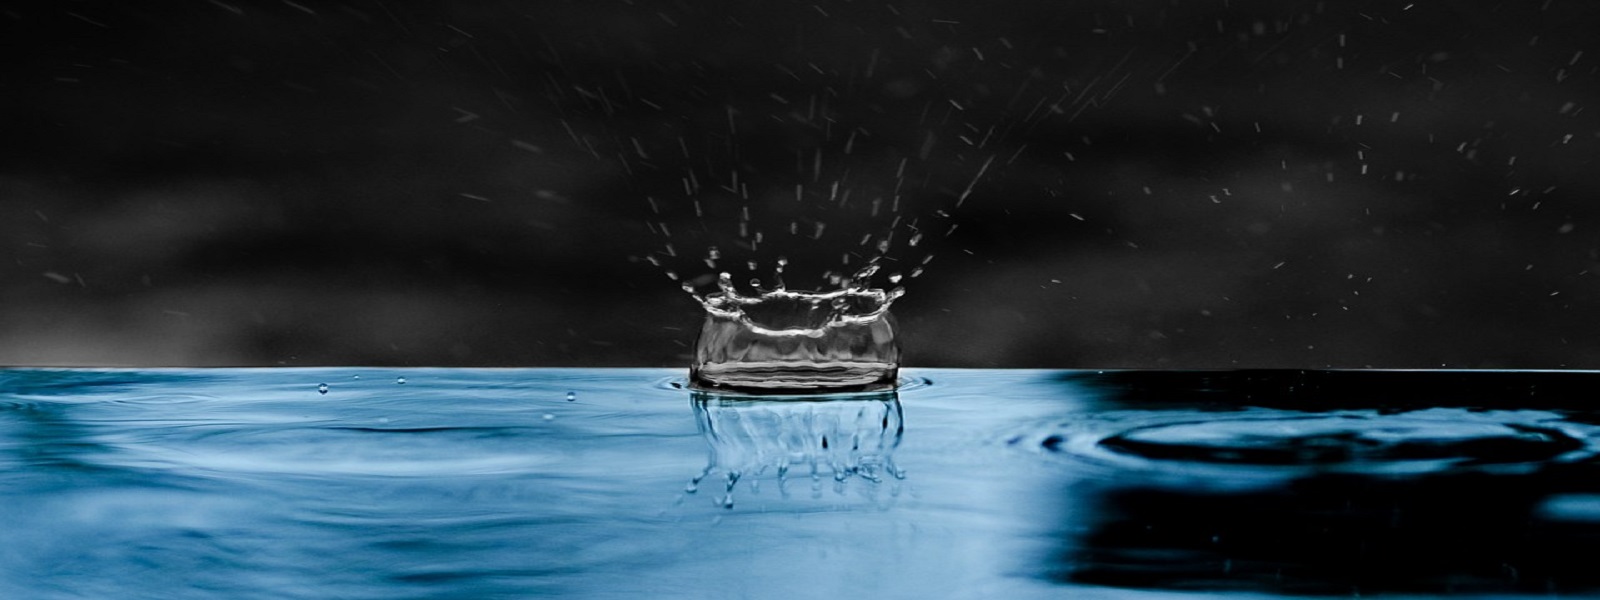 Raindrop splashing in a puddle